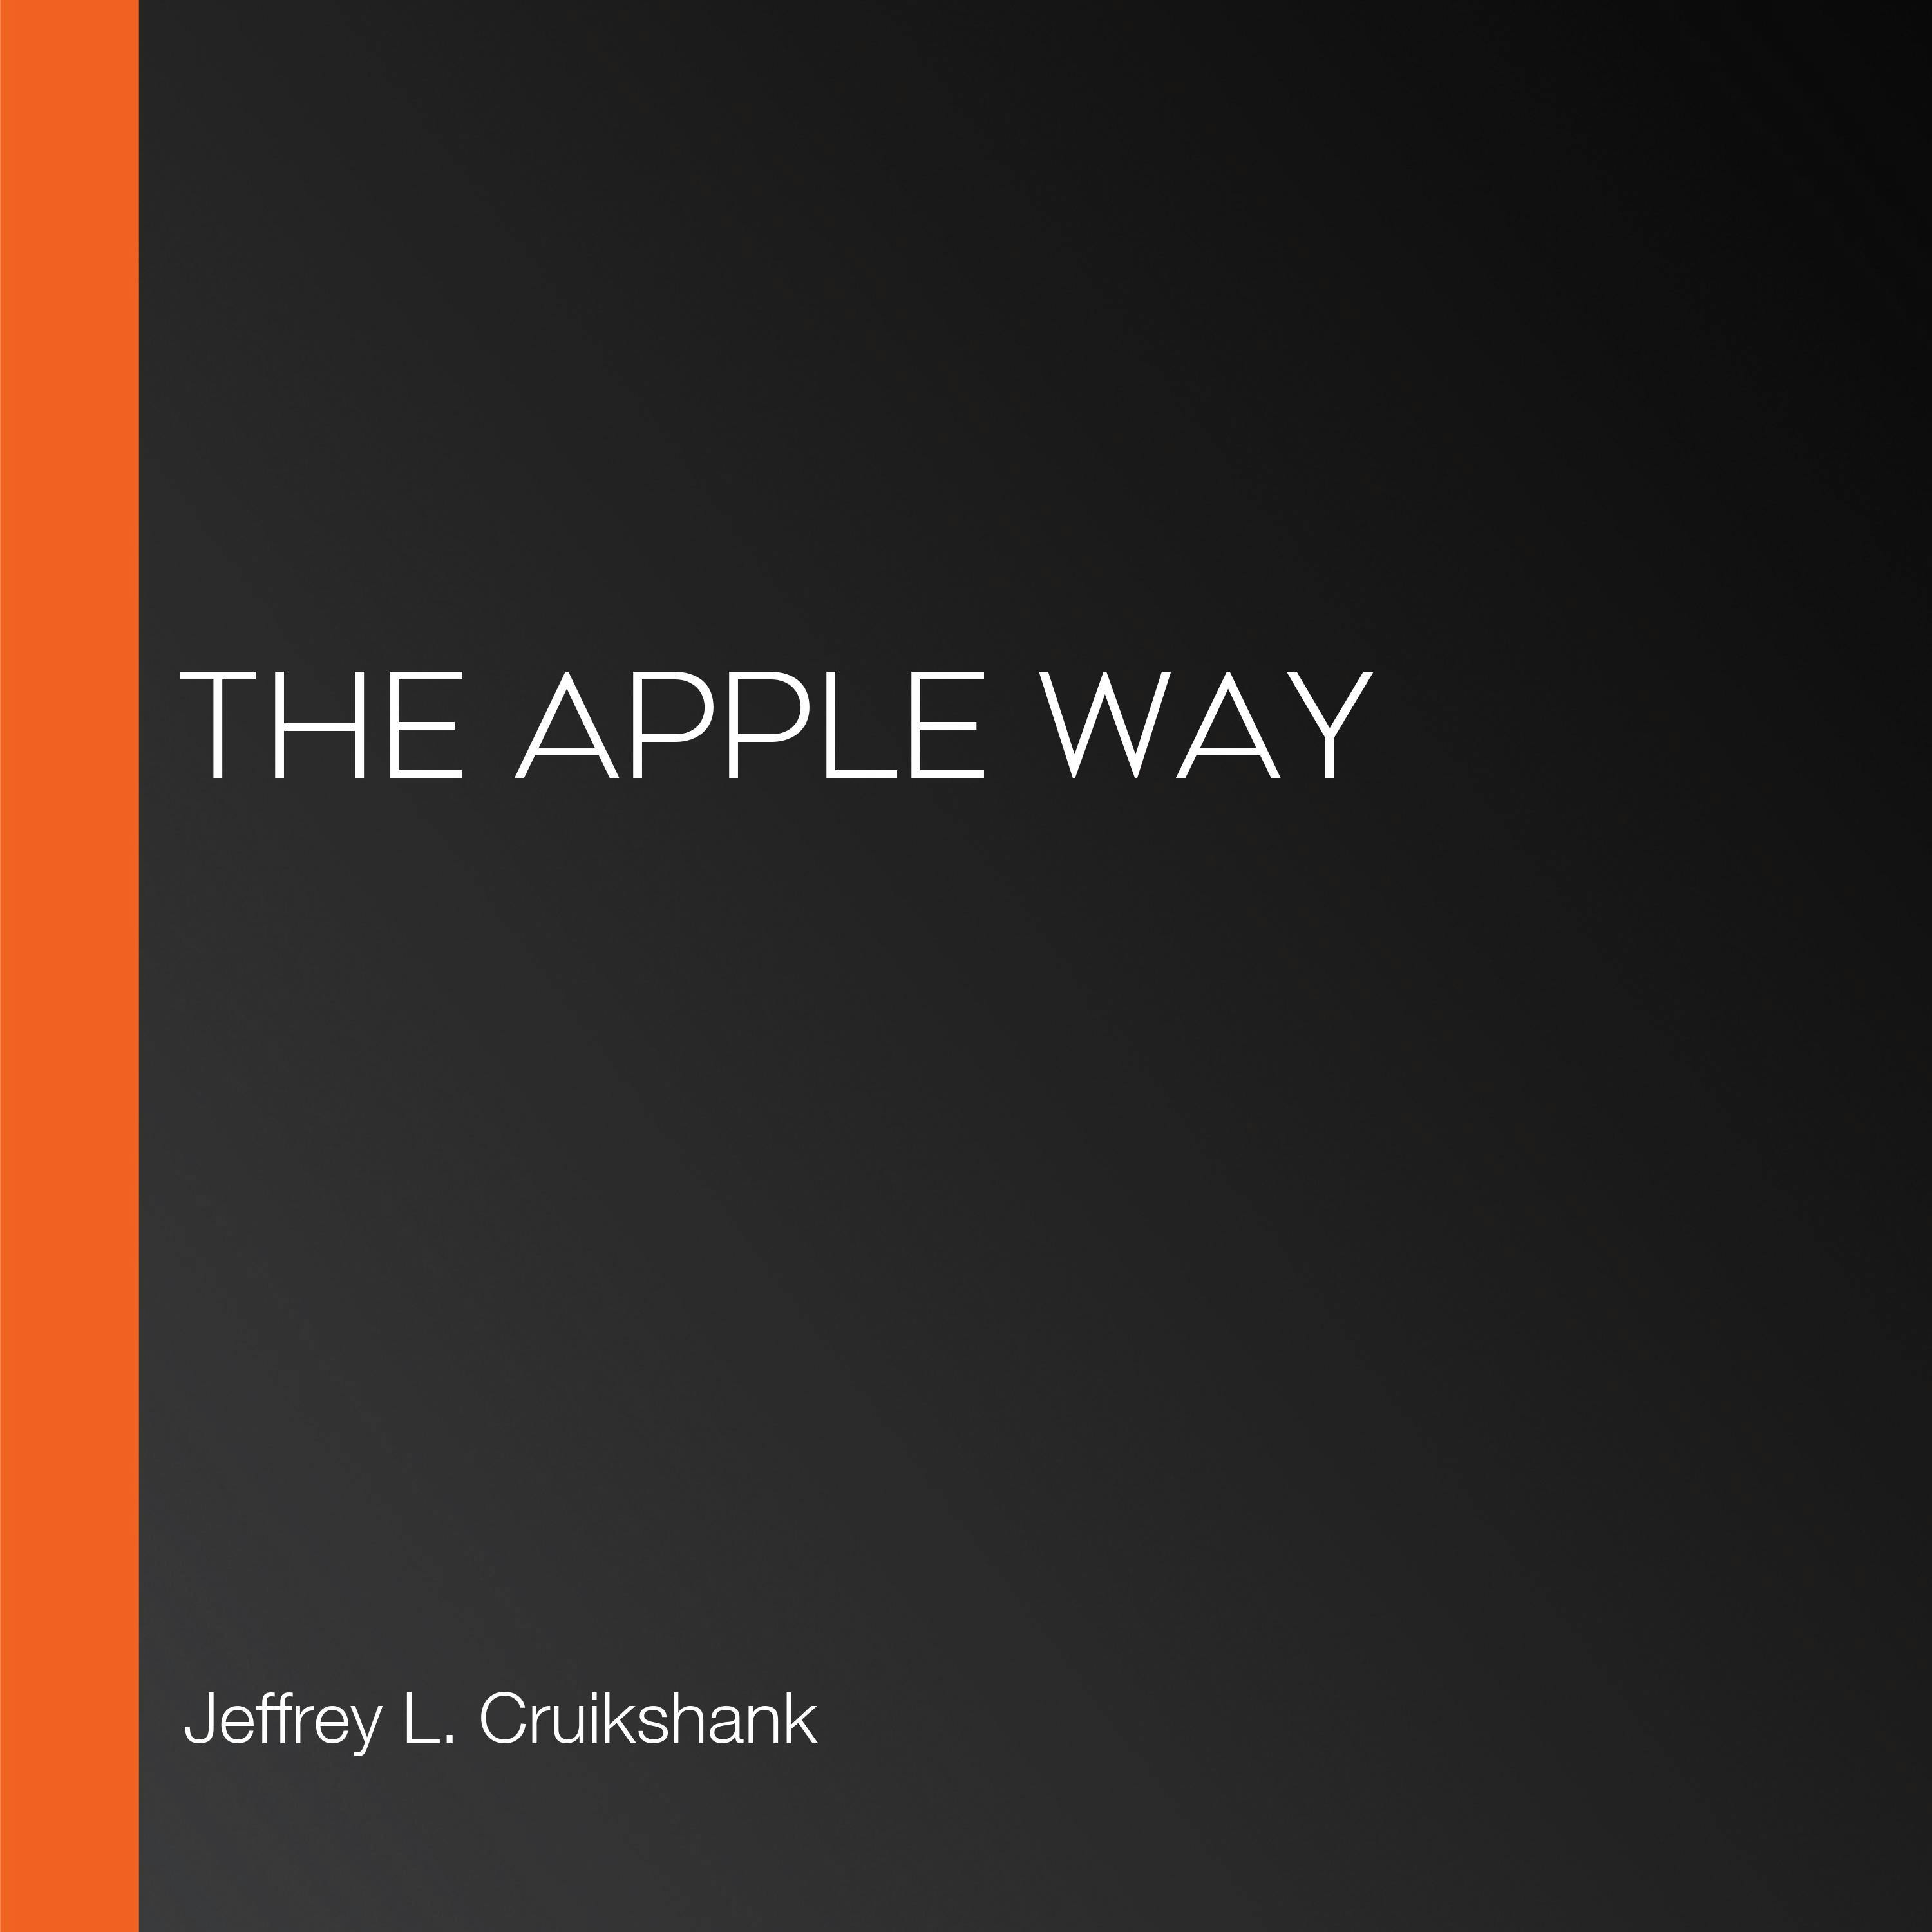 The Apple Way - Jeffrey L. Cruikshank